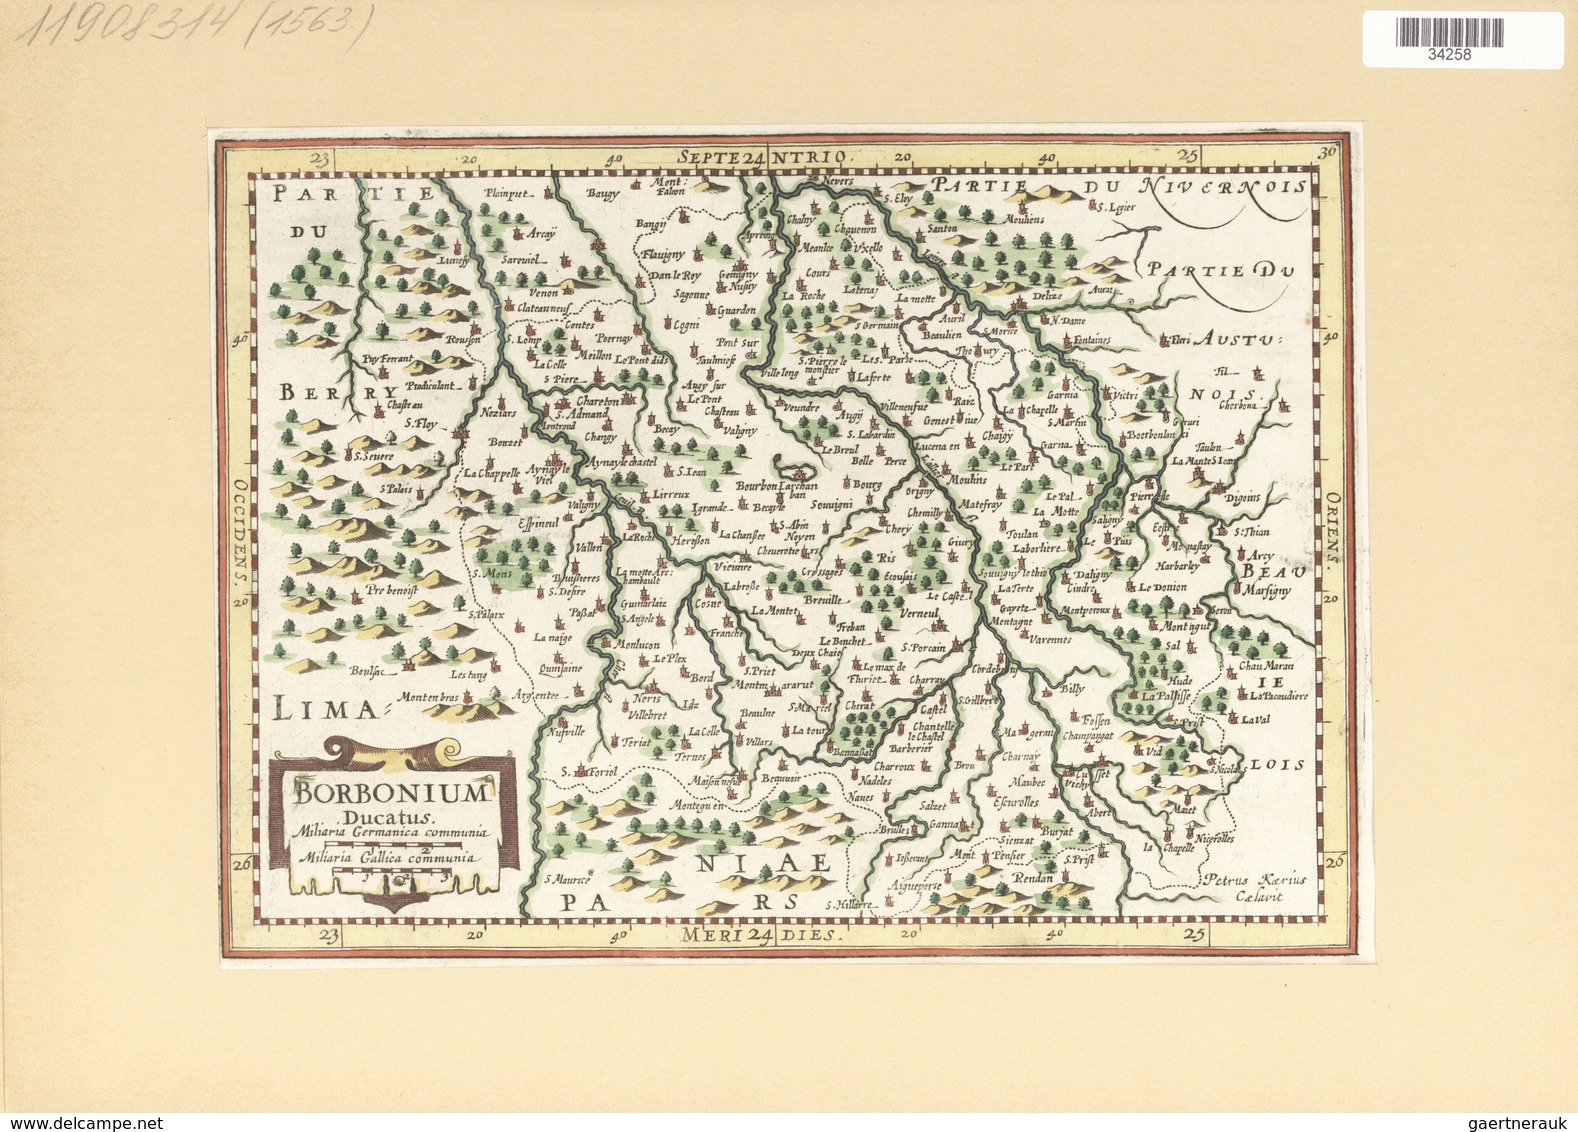 Landkarten Und Stiche: 1734. Borbonium Ducatus. From The Mercator Atlas Minor Ca 1648, Later Altered - Geographie